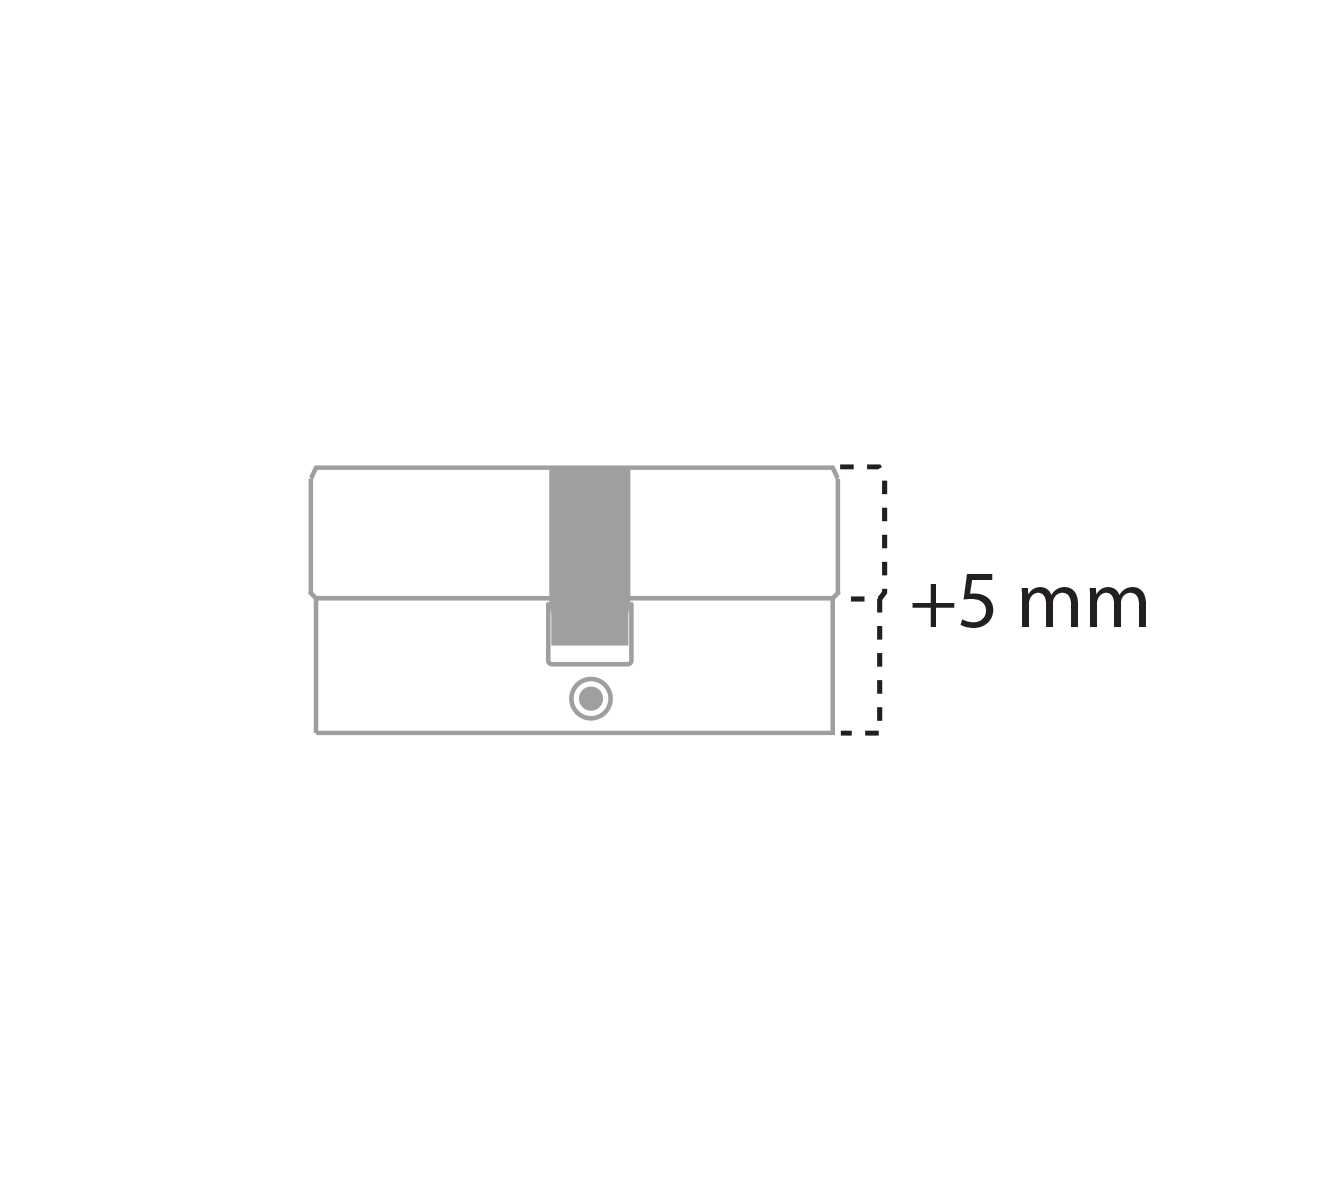 DK - Doplnková funkcia - Obojstranná vložka pre zubové kľúče  - 5 mm naviac